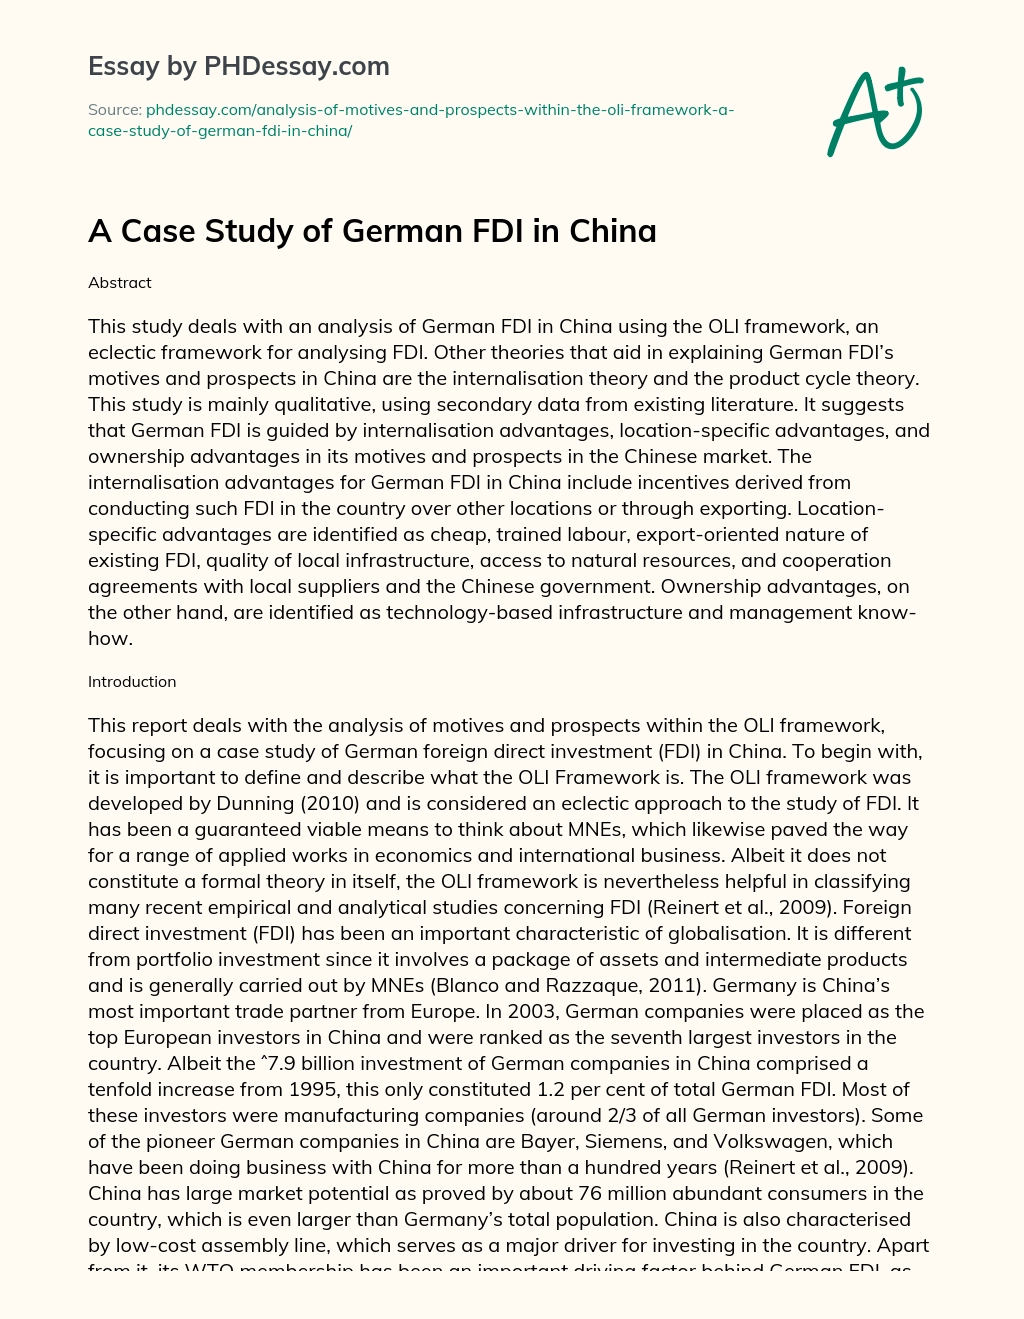 A Case Study of German FDI in China essay